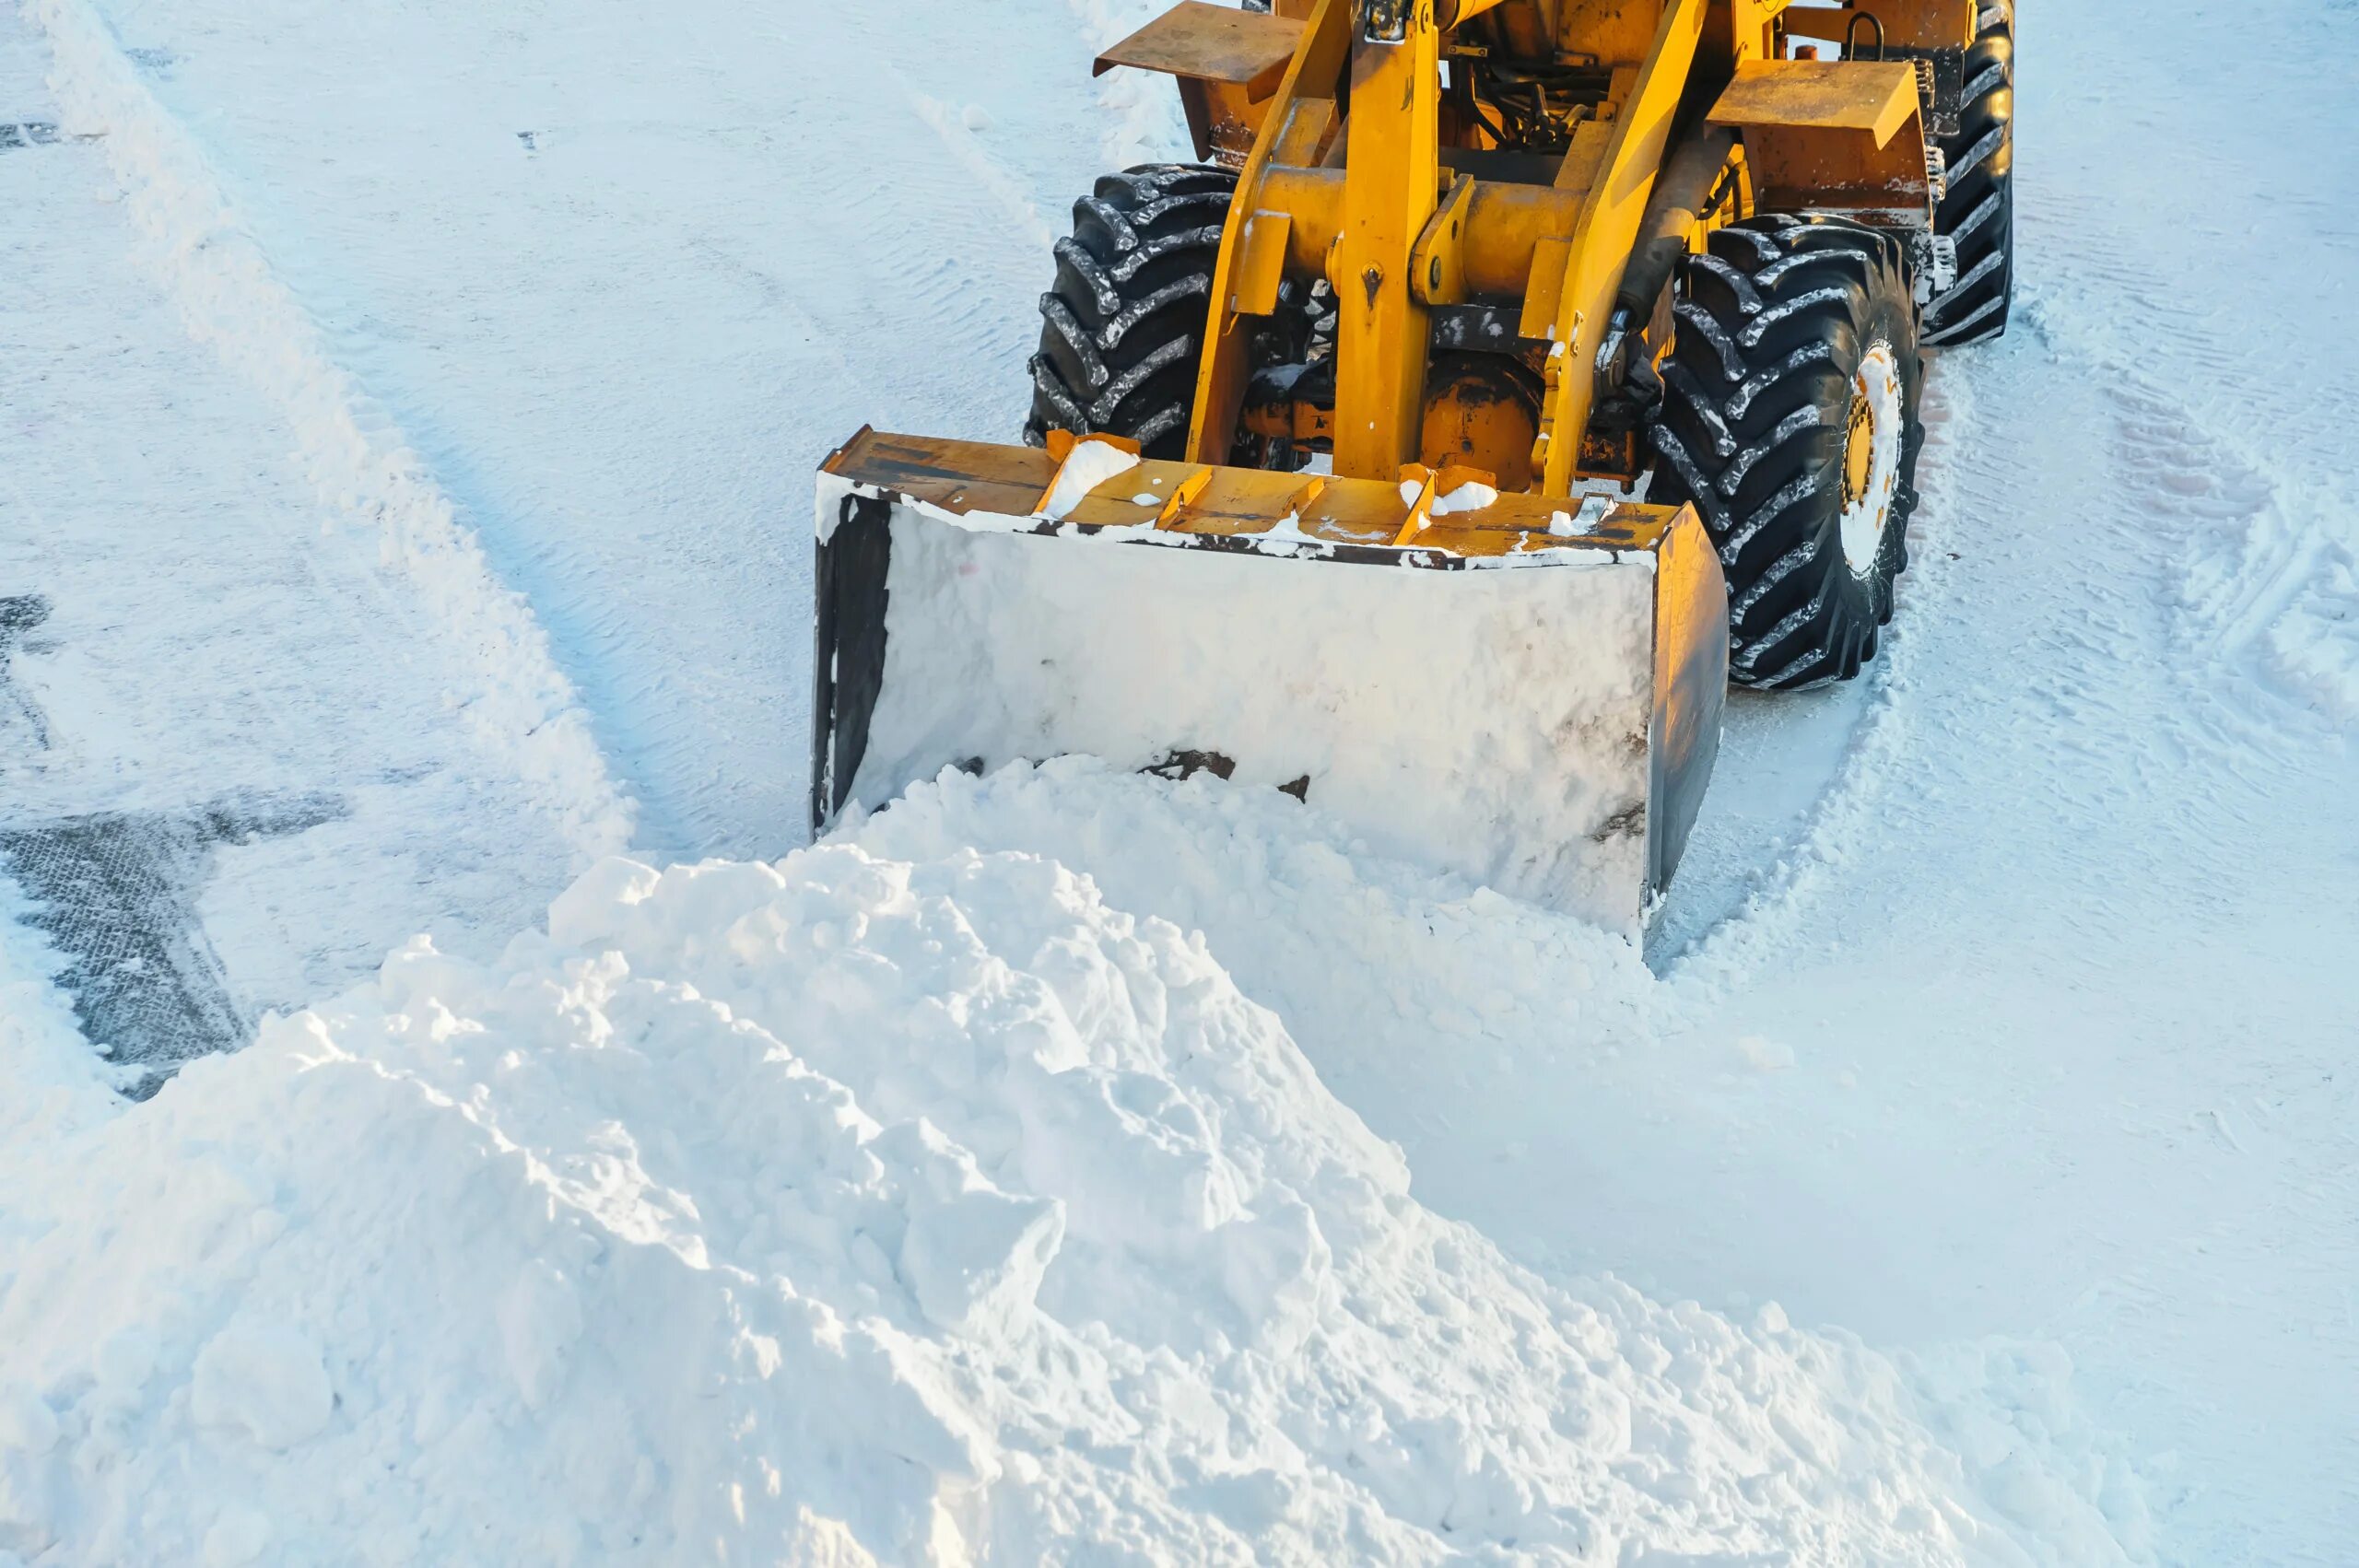 Игра трактора чистят снег. МТЗ-82 зимой уборка снега. Трактор для чистки снега. Расчистка снега трактором. Трактор с ковшом для снега.